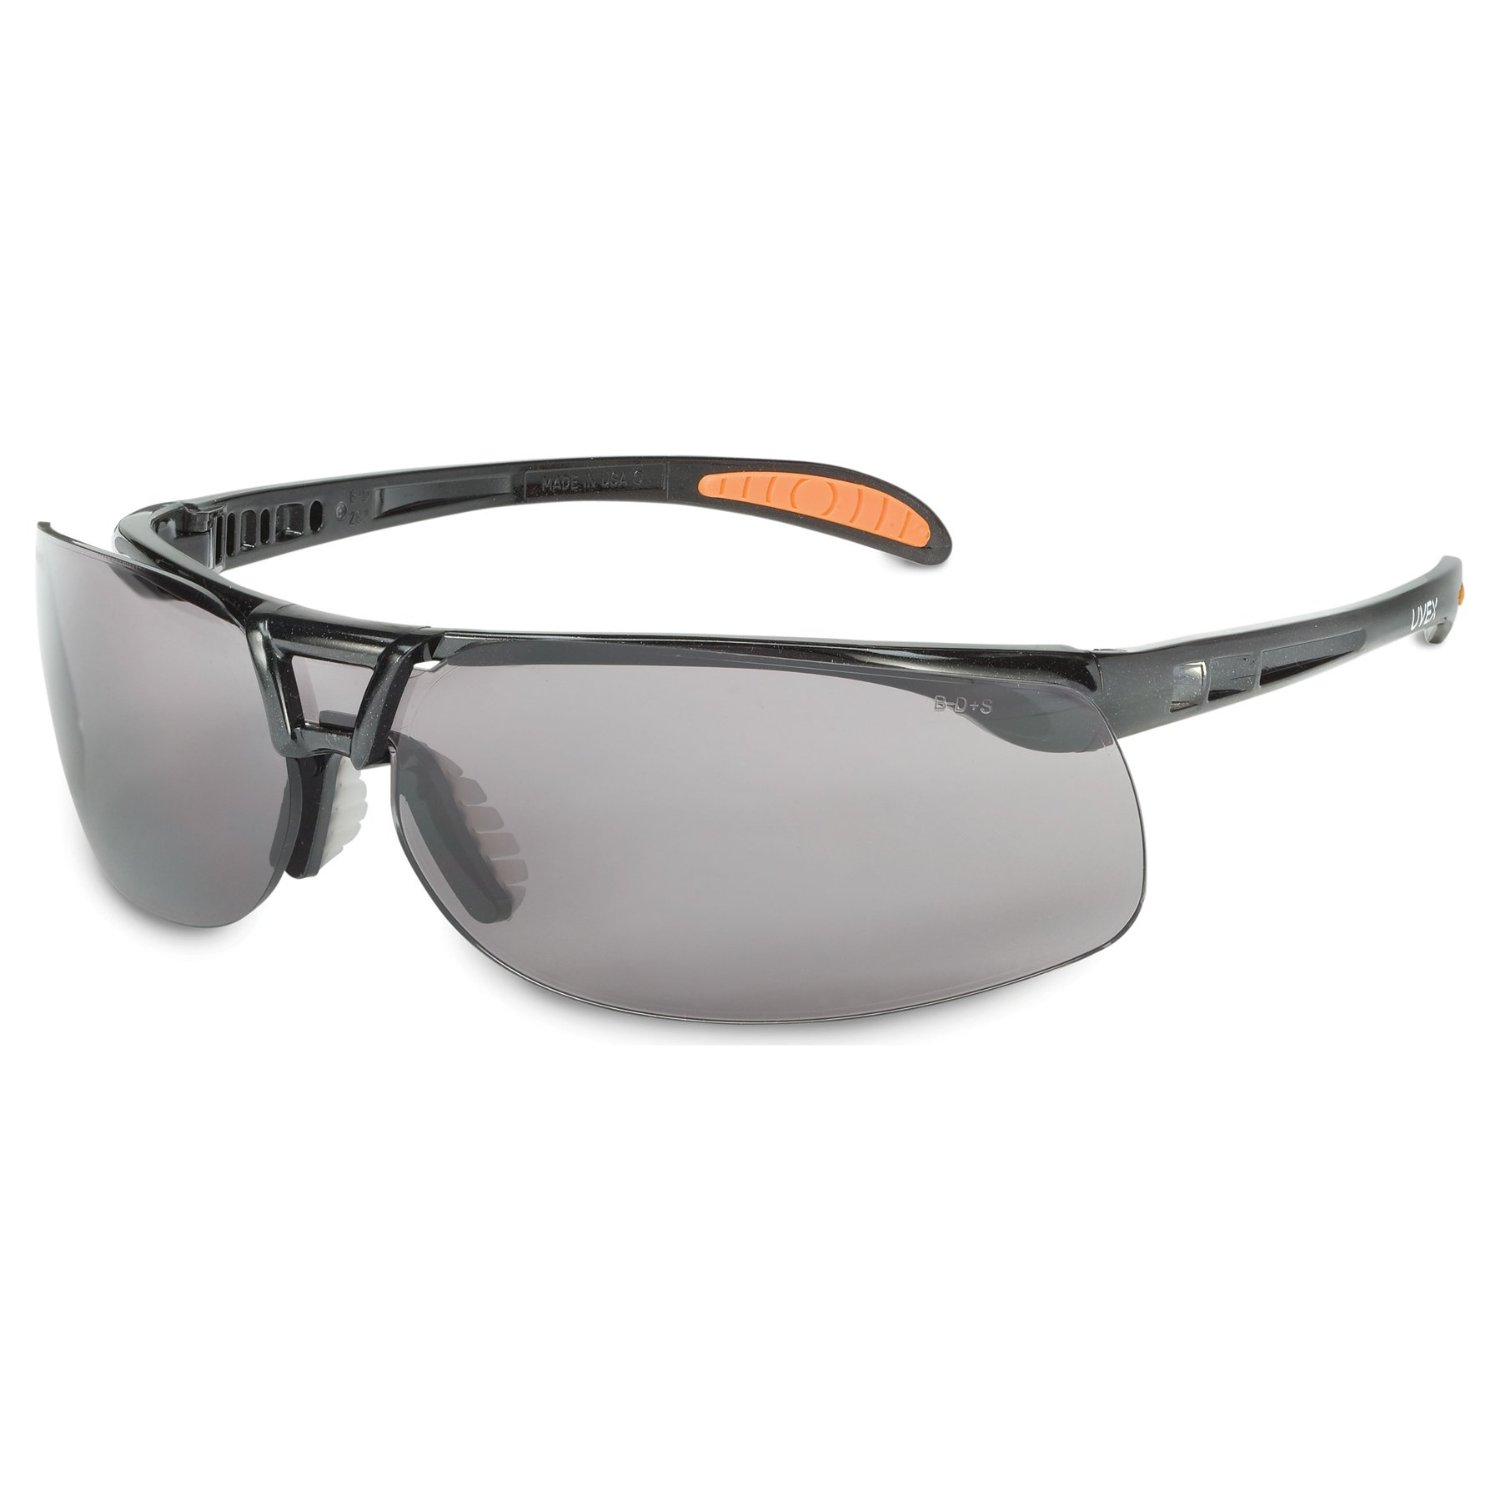 Uvex S4200 Protégé Safety Eyewear with a Cool Metallic Black Frame